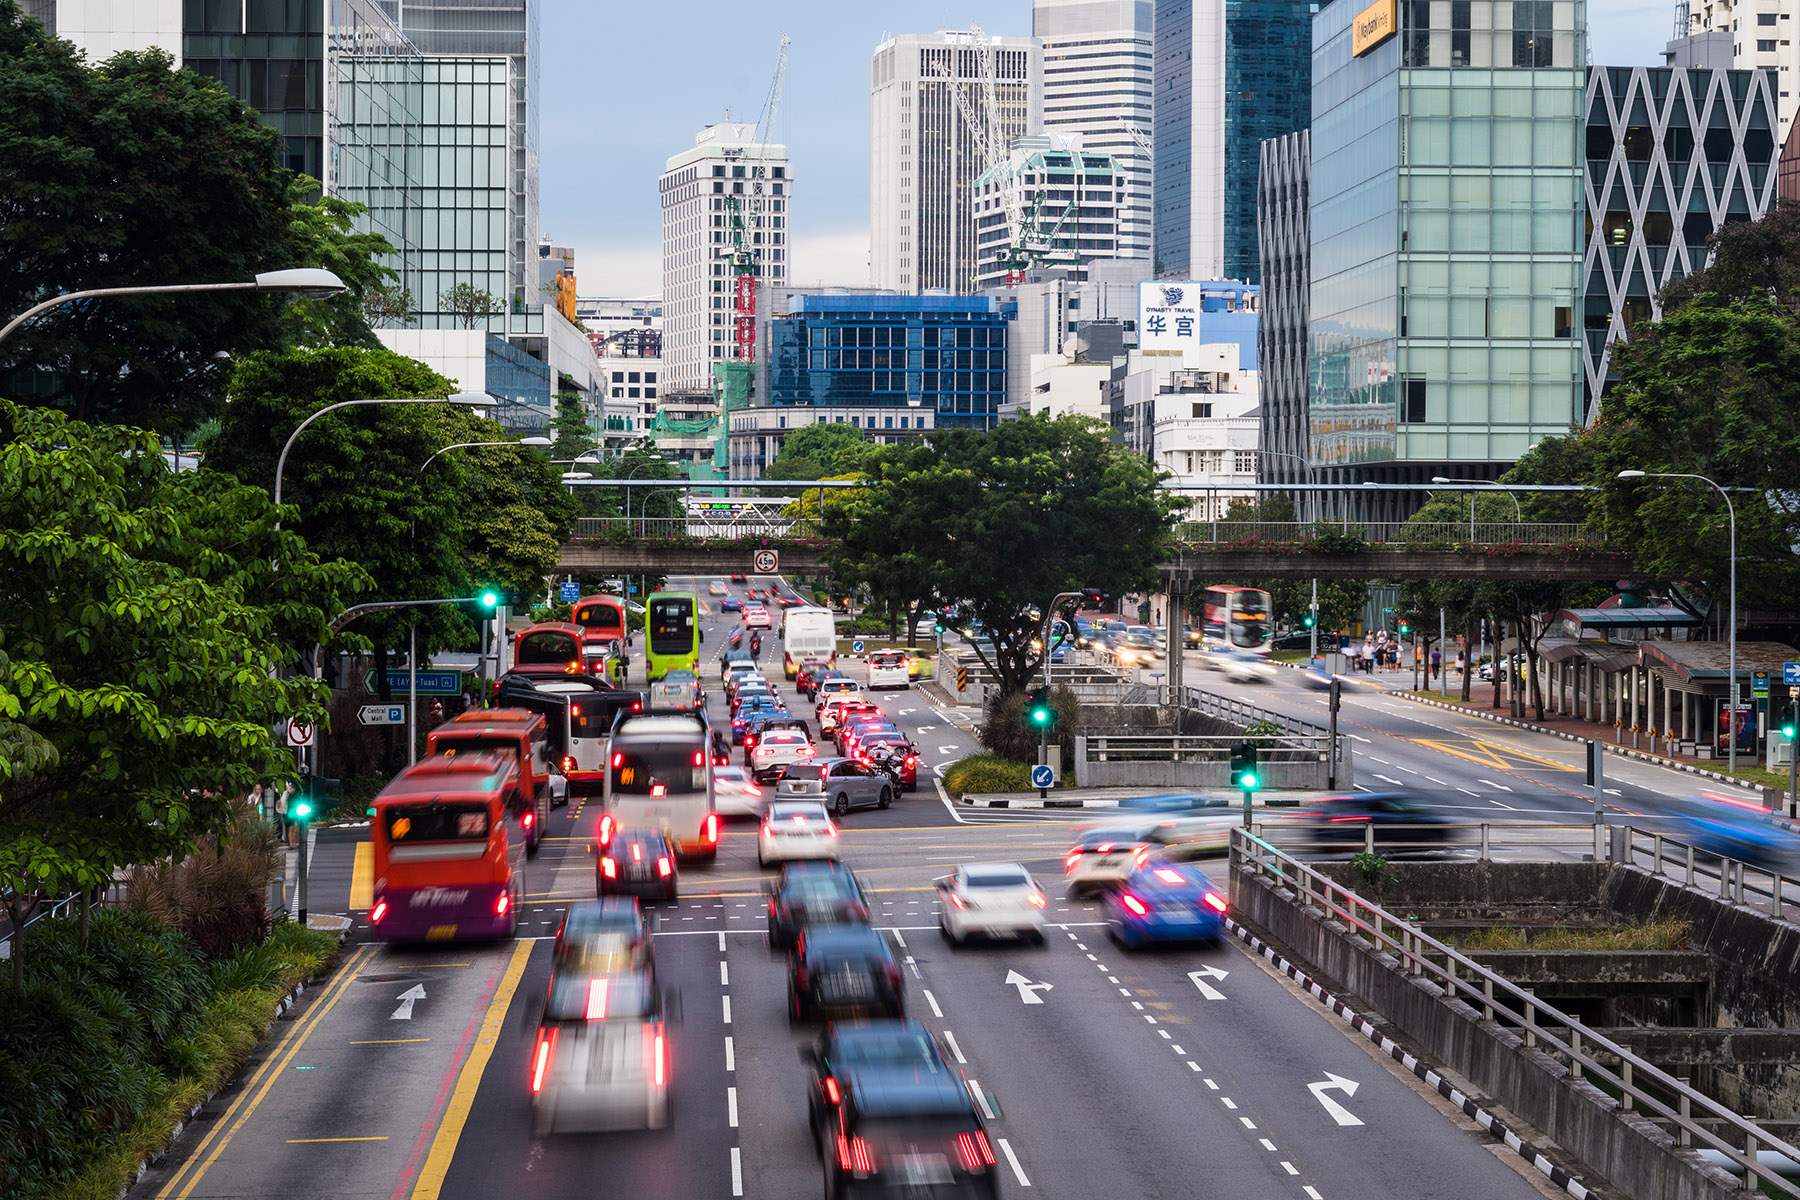 Traffic with Singapore's skyline